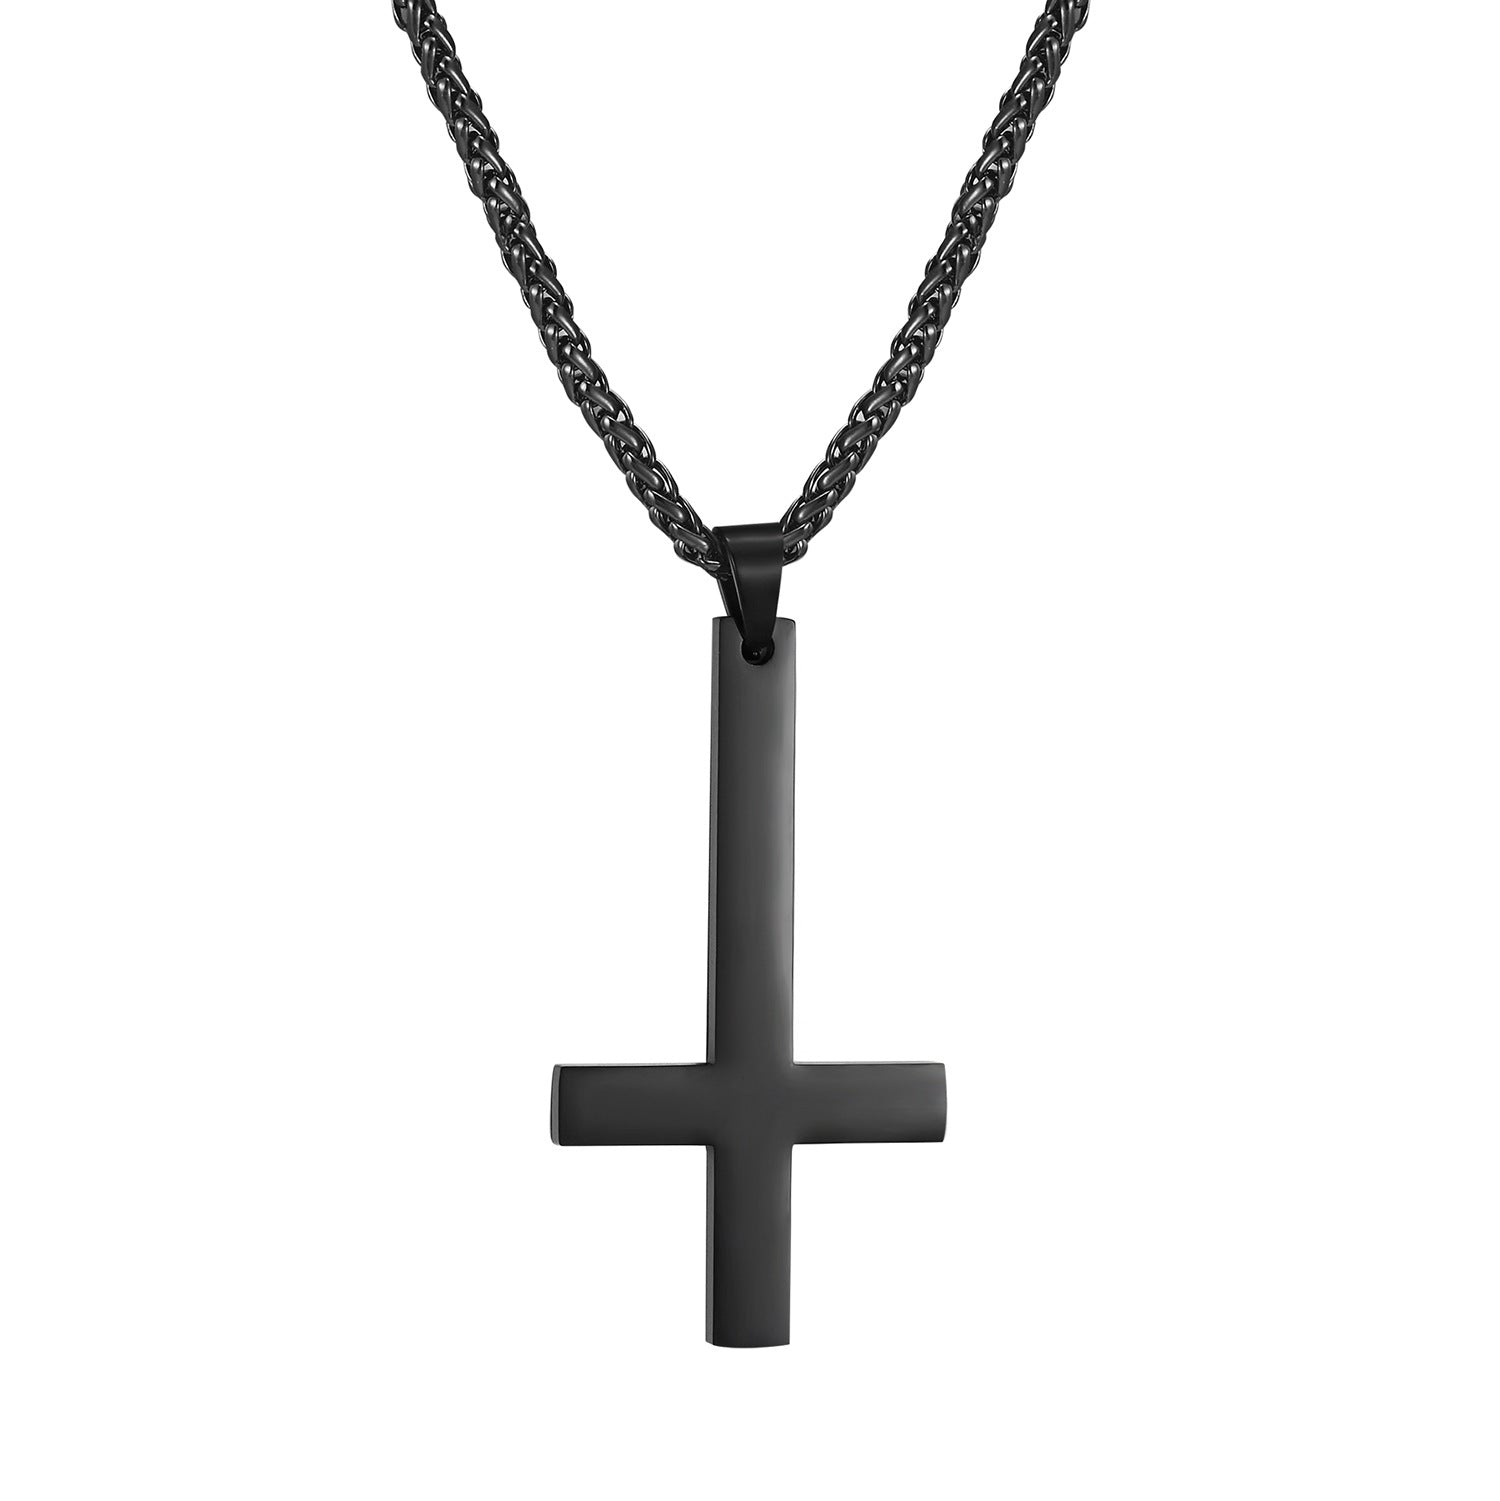 Titanium steel smooth cross necklace pendant - Premium necklace from Concordia Style Boutique - Just $21! Shop now at Concordia Style Boutique